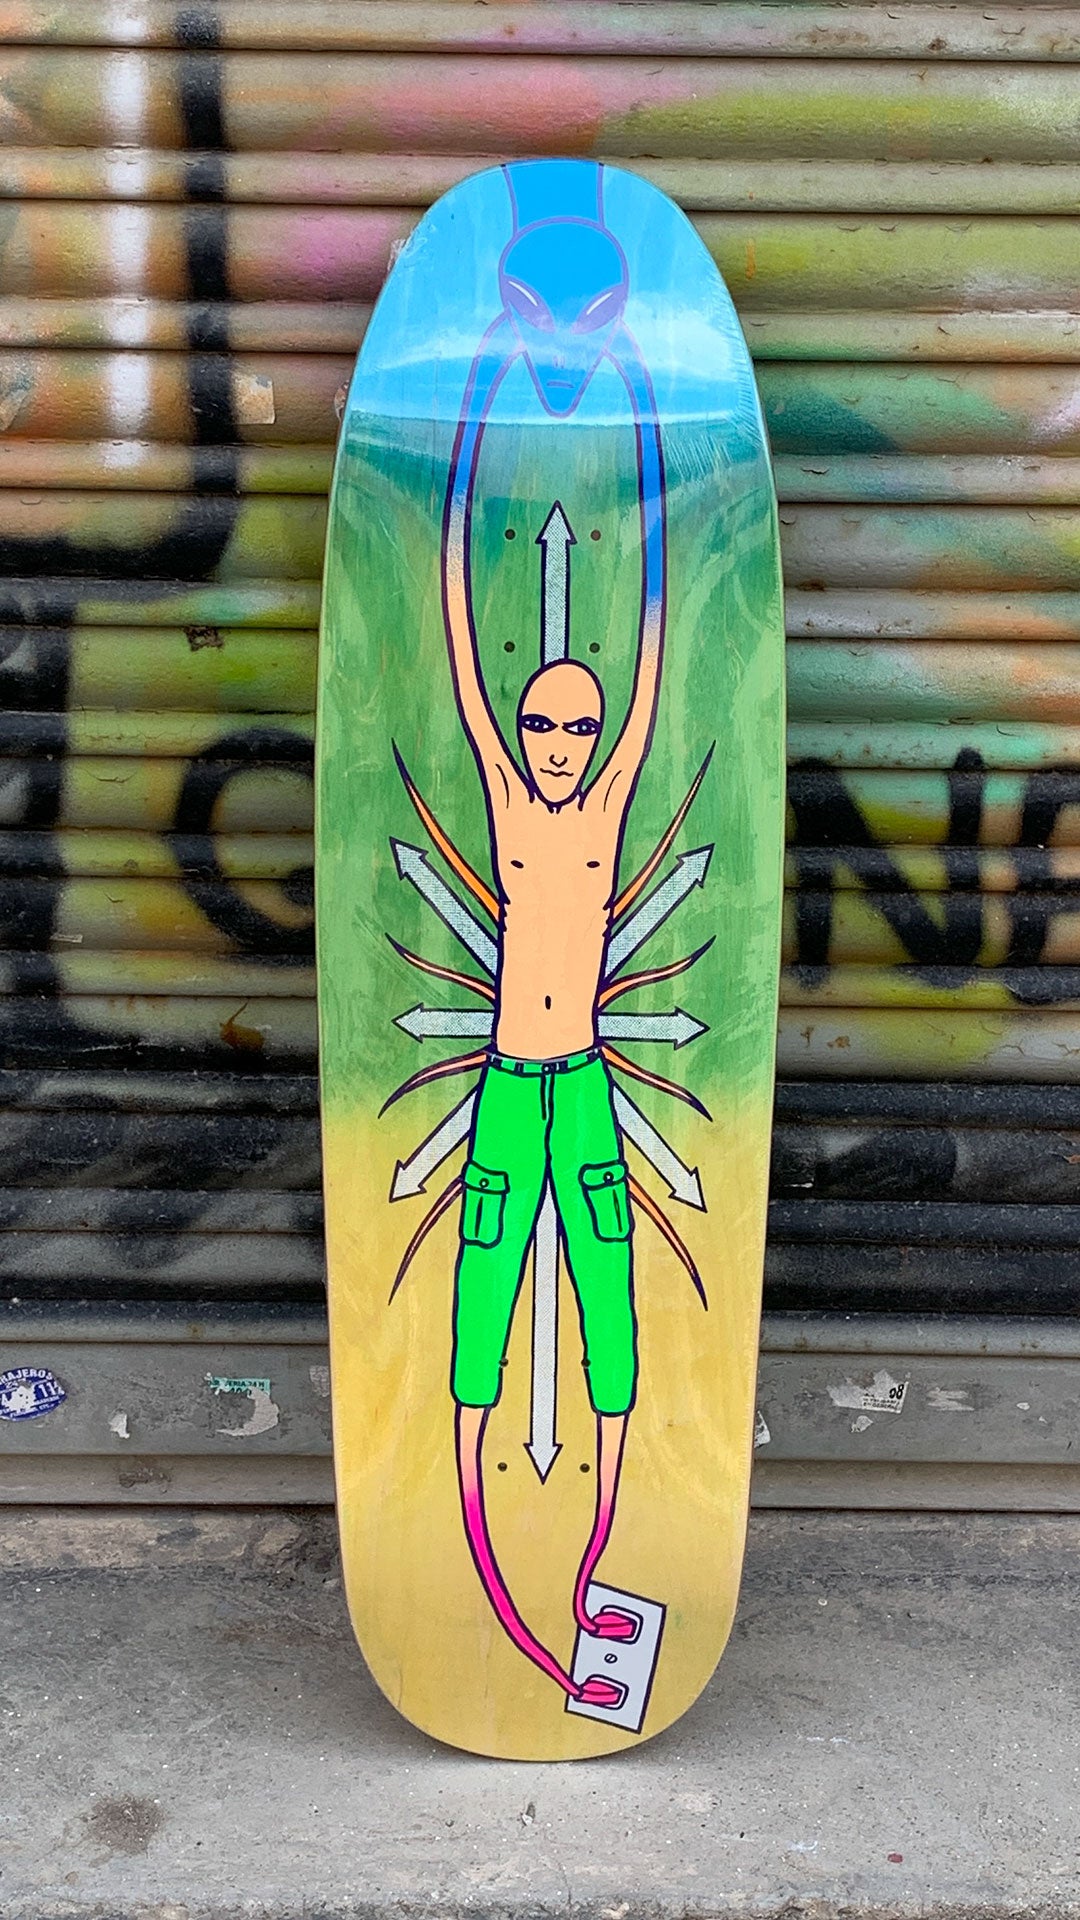 New Deal Vallely Alien 9.18 Skateboard Deck- Tabla Skate Tabla/Deck New Deal 